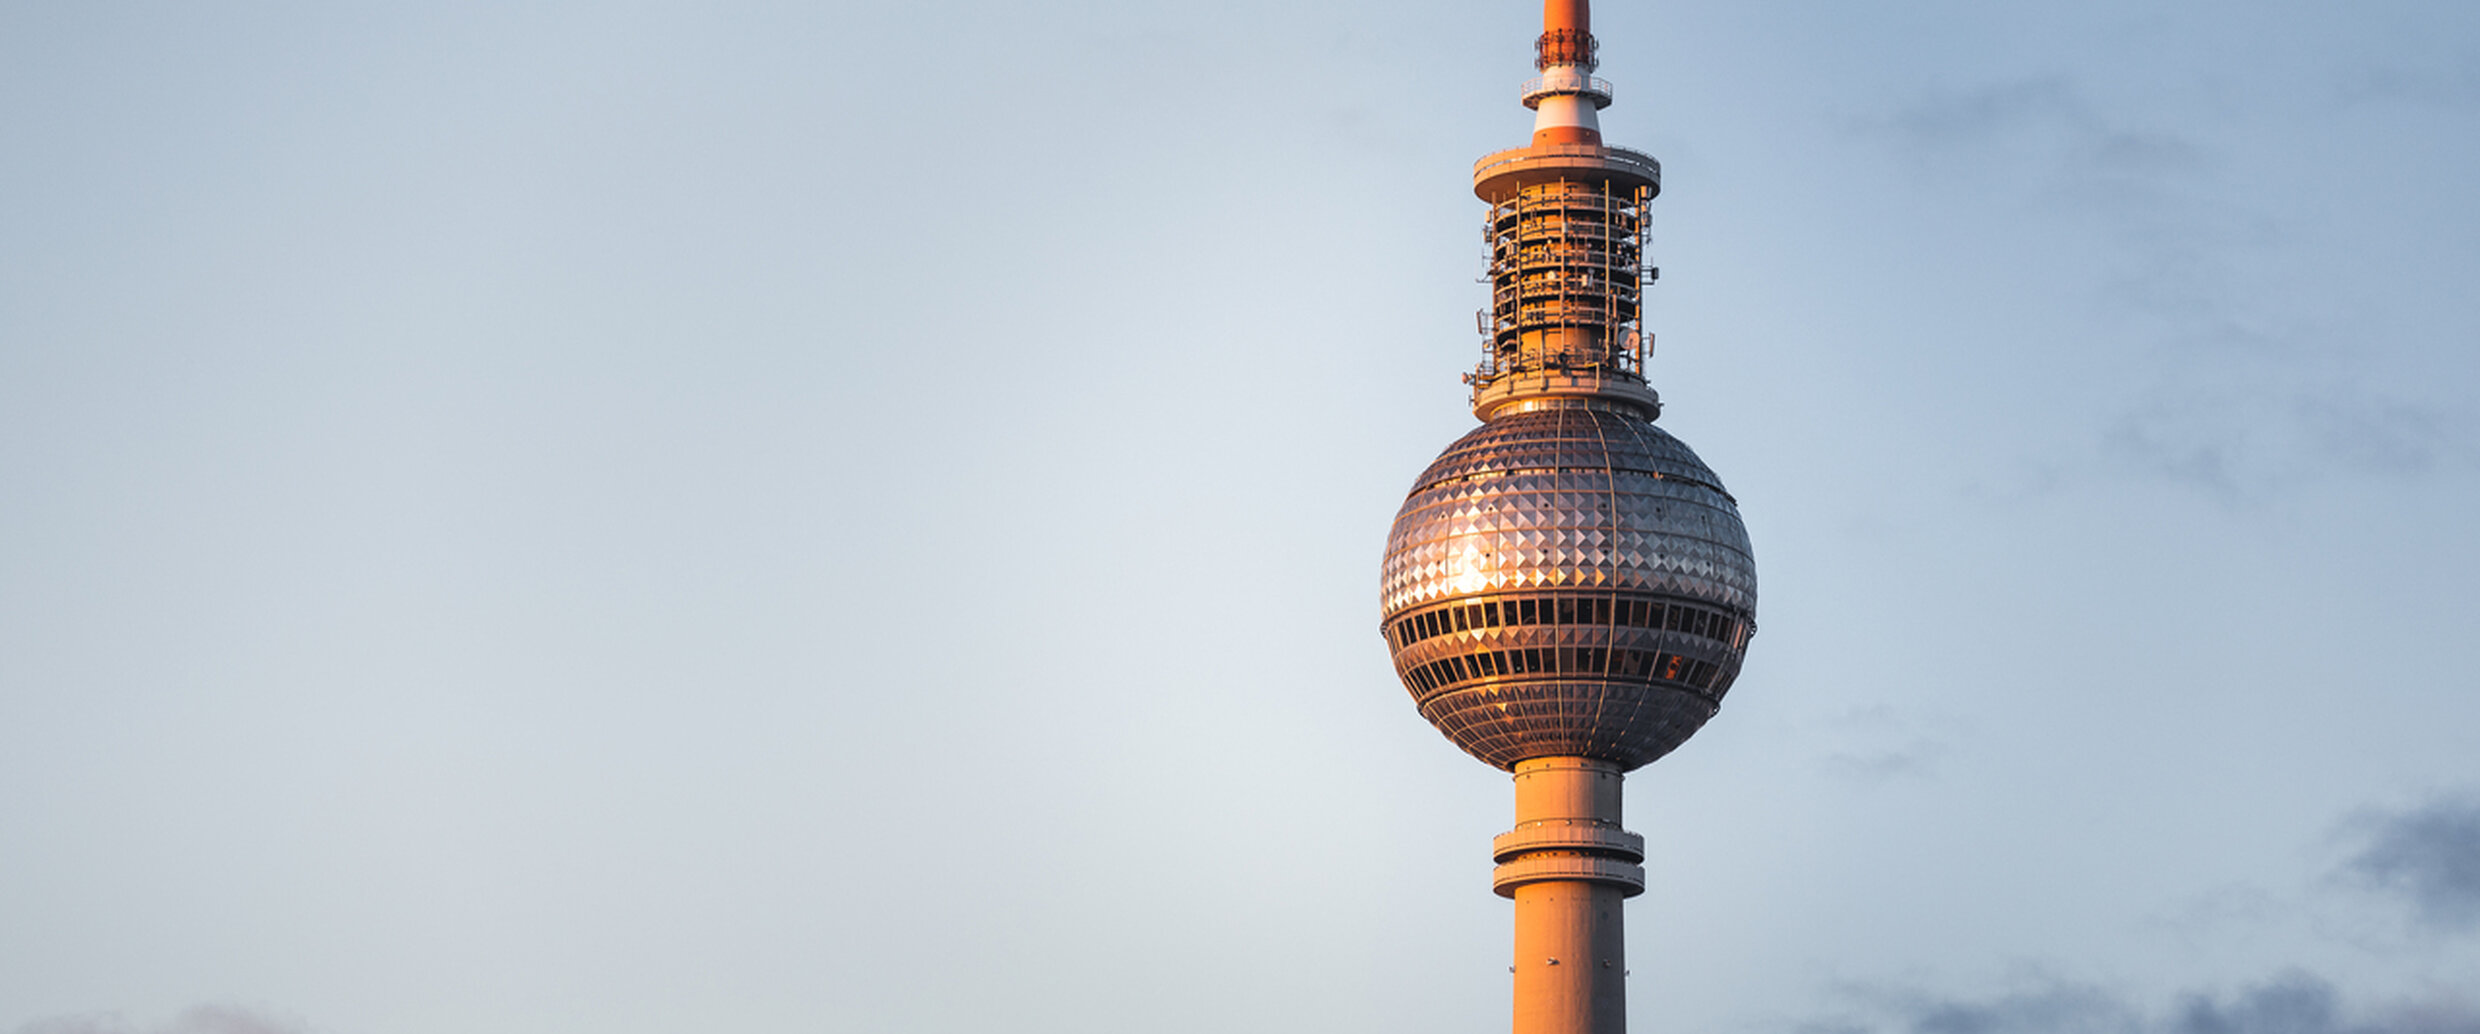 Berlin's Top Attractions - places to visit in | visitBerlin.de